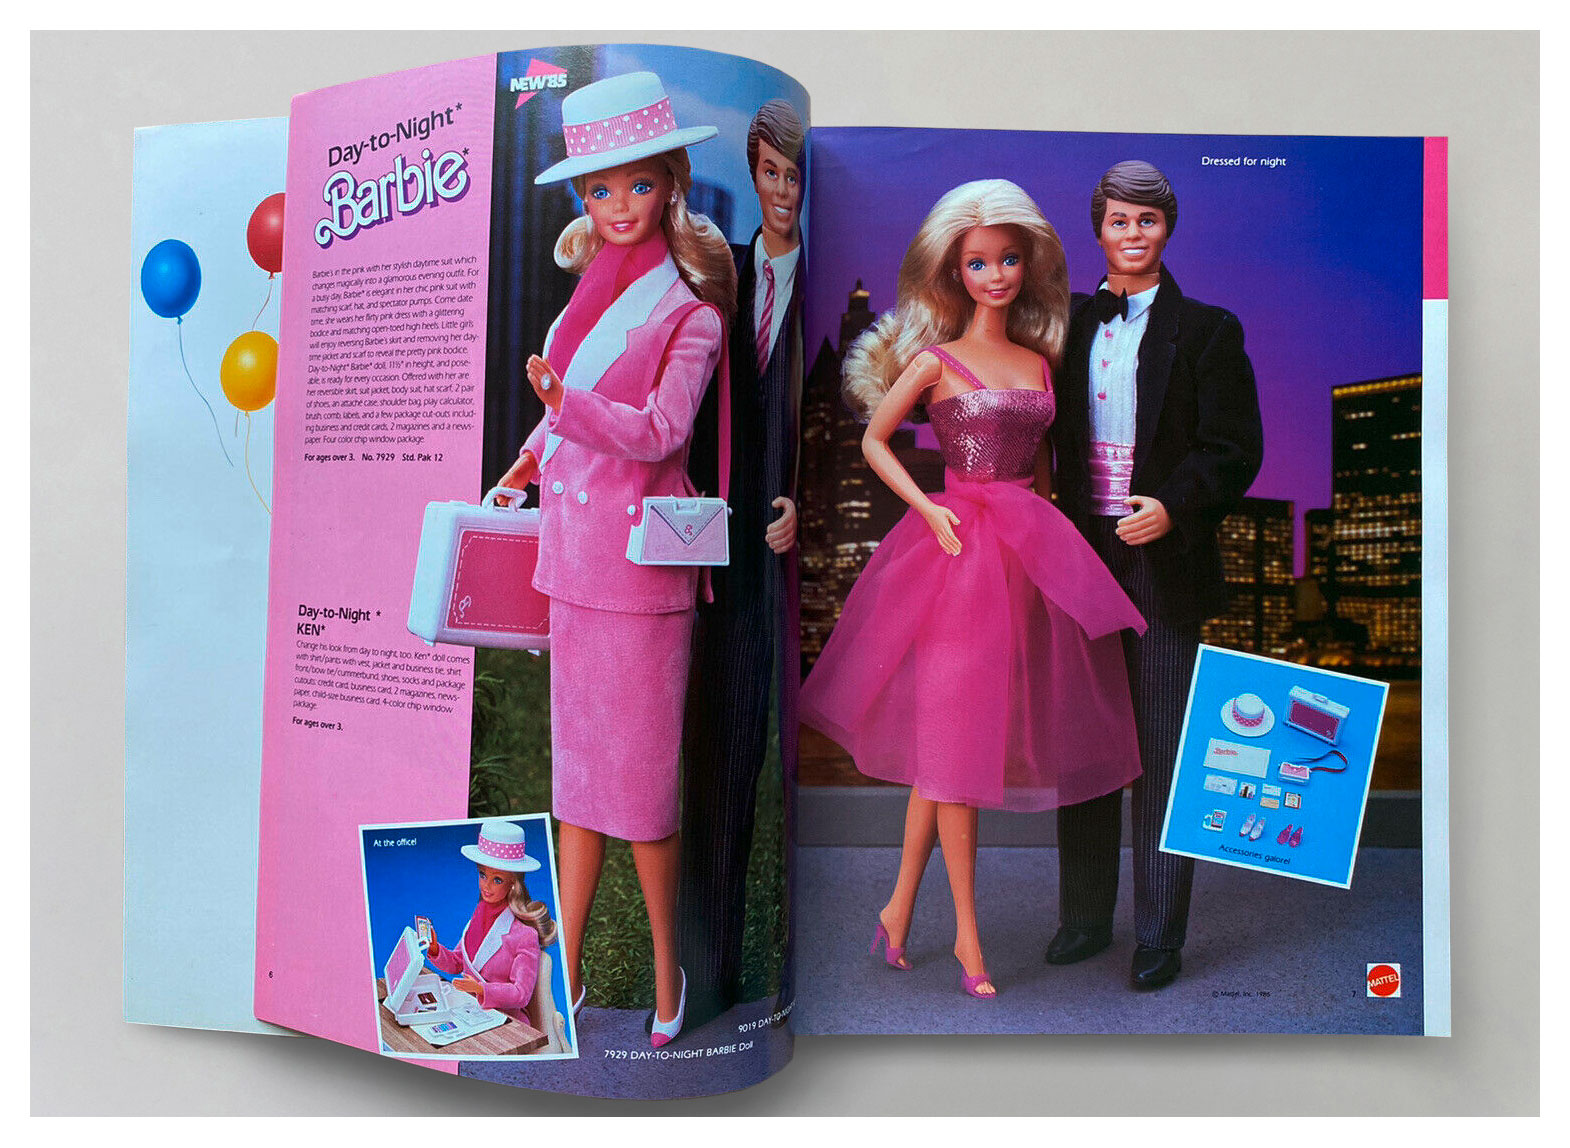 From 1985 Australian Mattel Toys catalogue